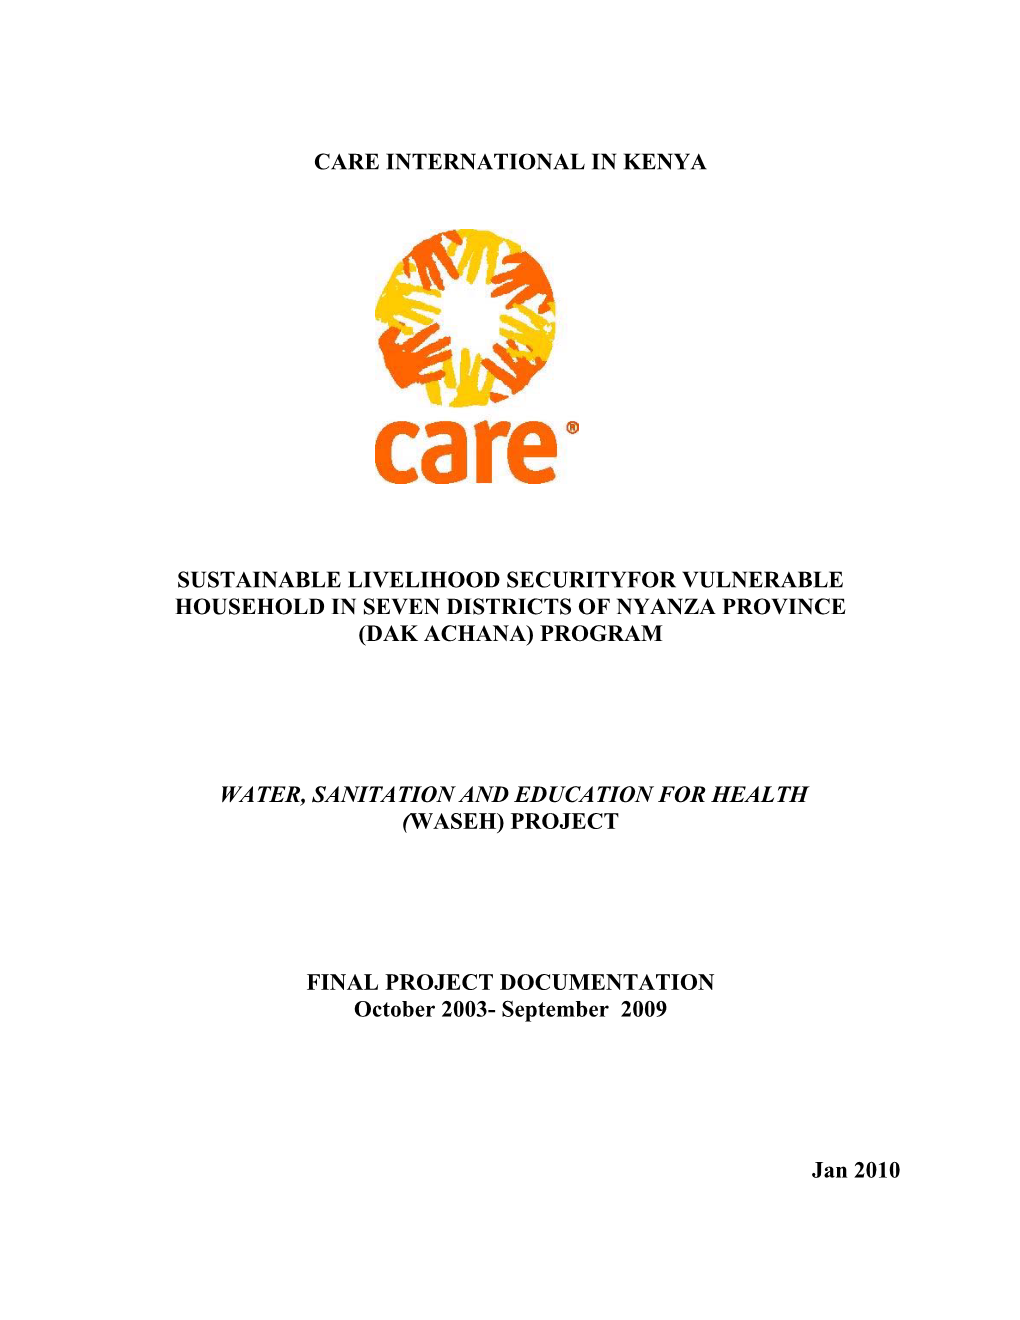 Care International in Kenya Sustainable Livelihood